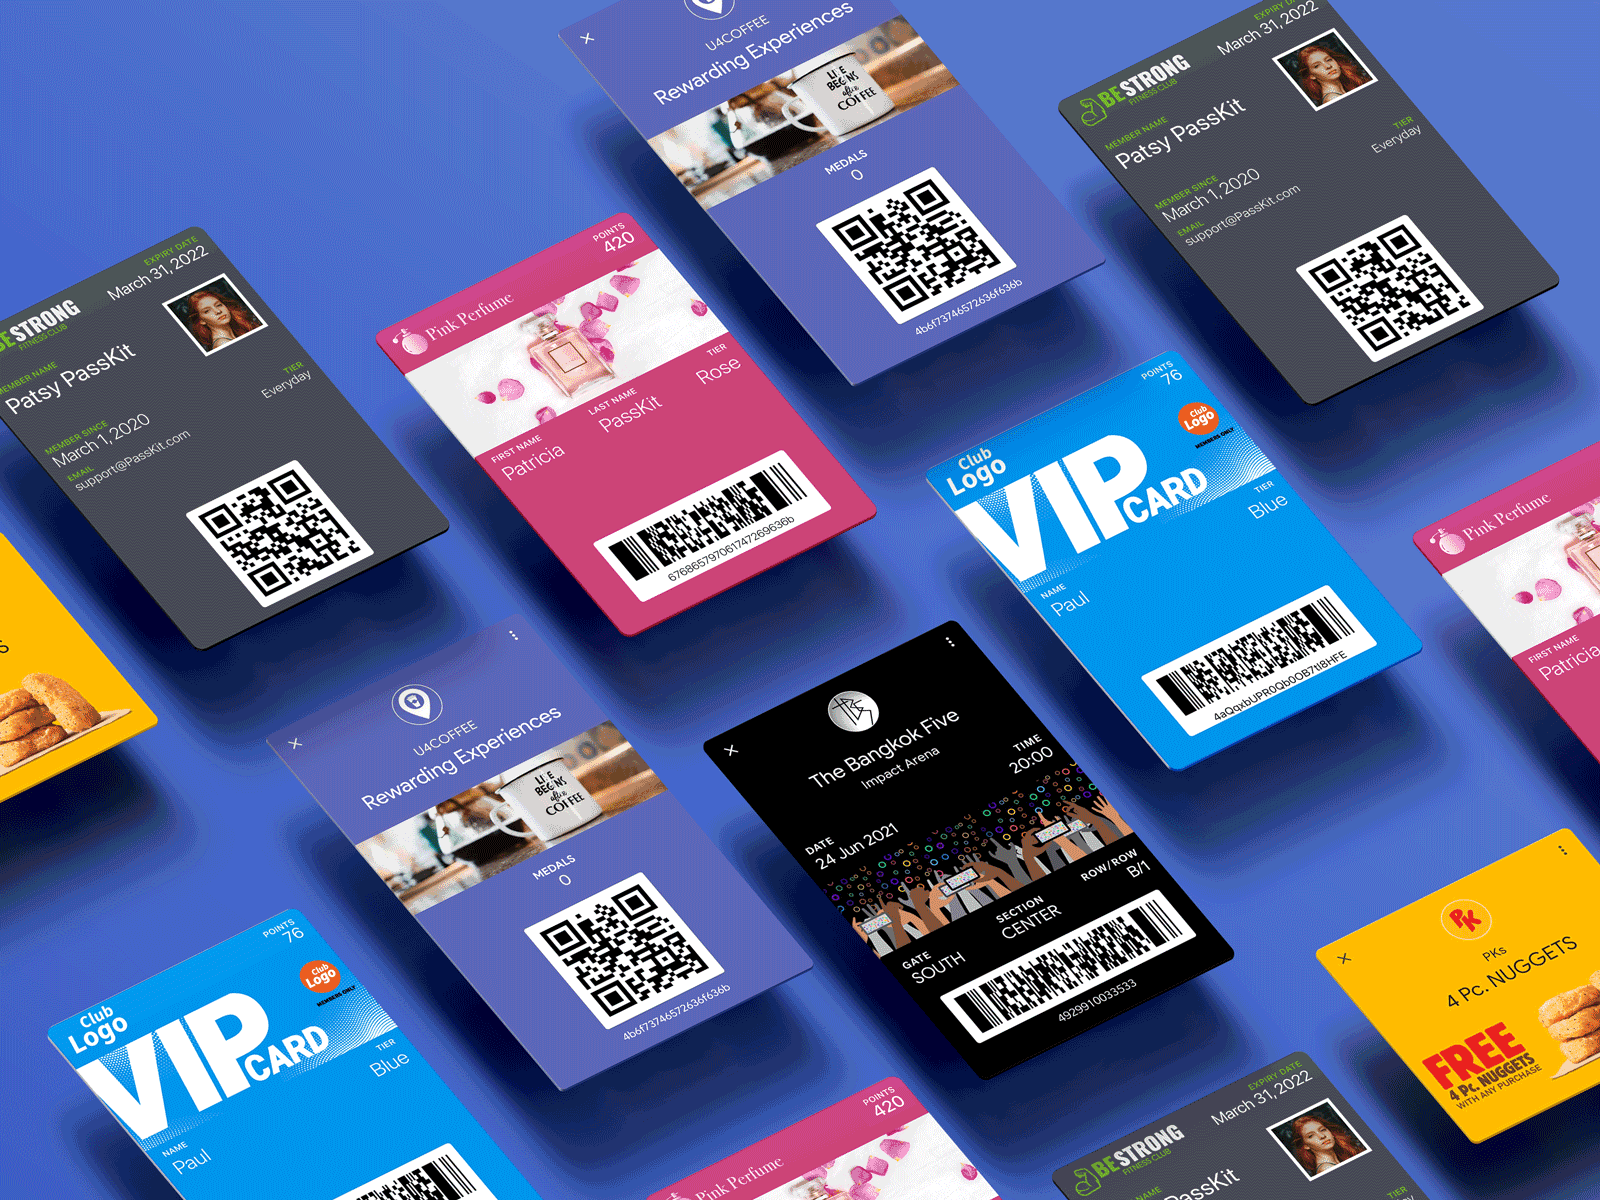 PassKit digital membership cards